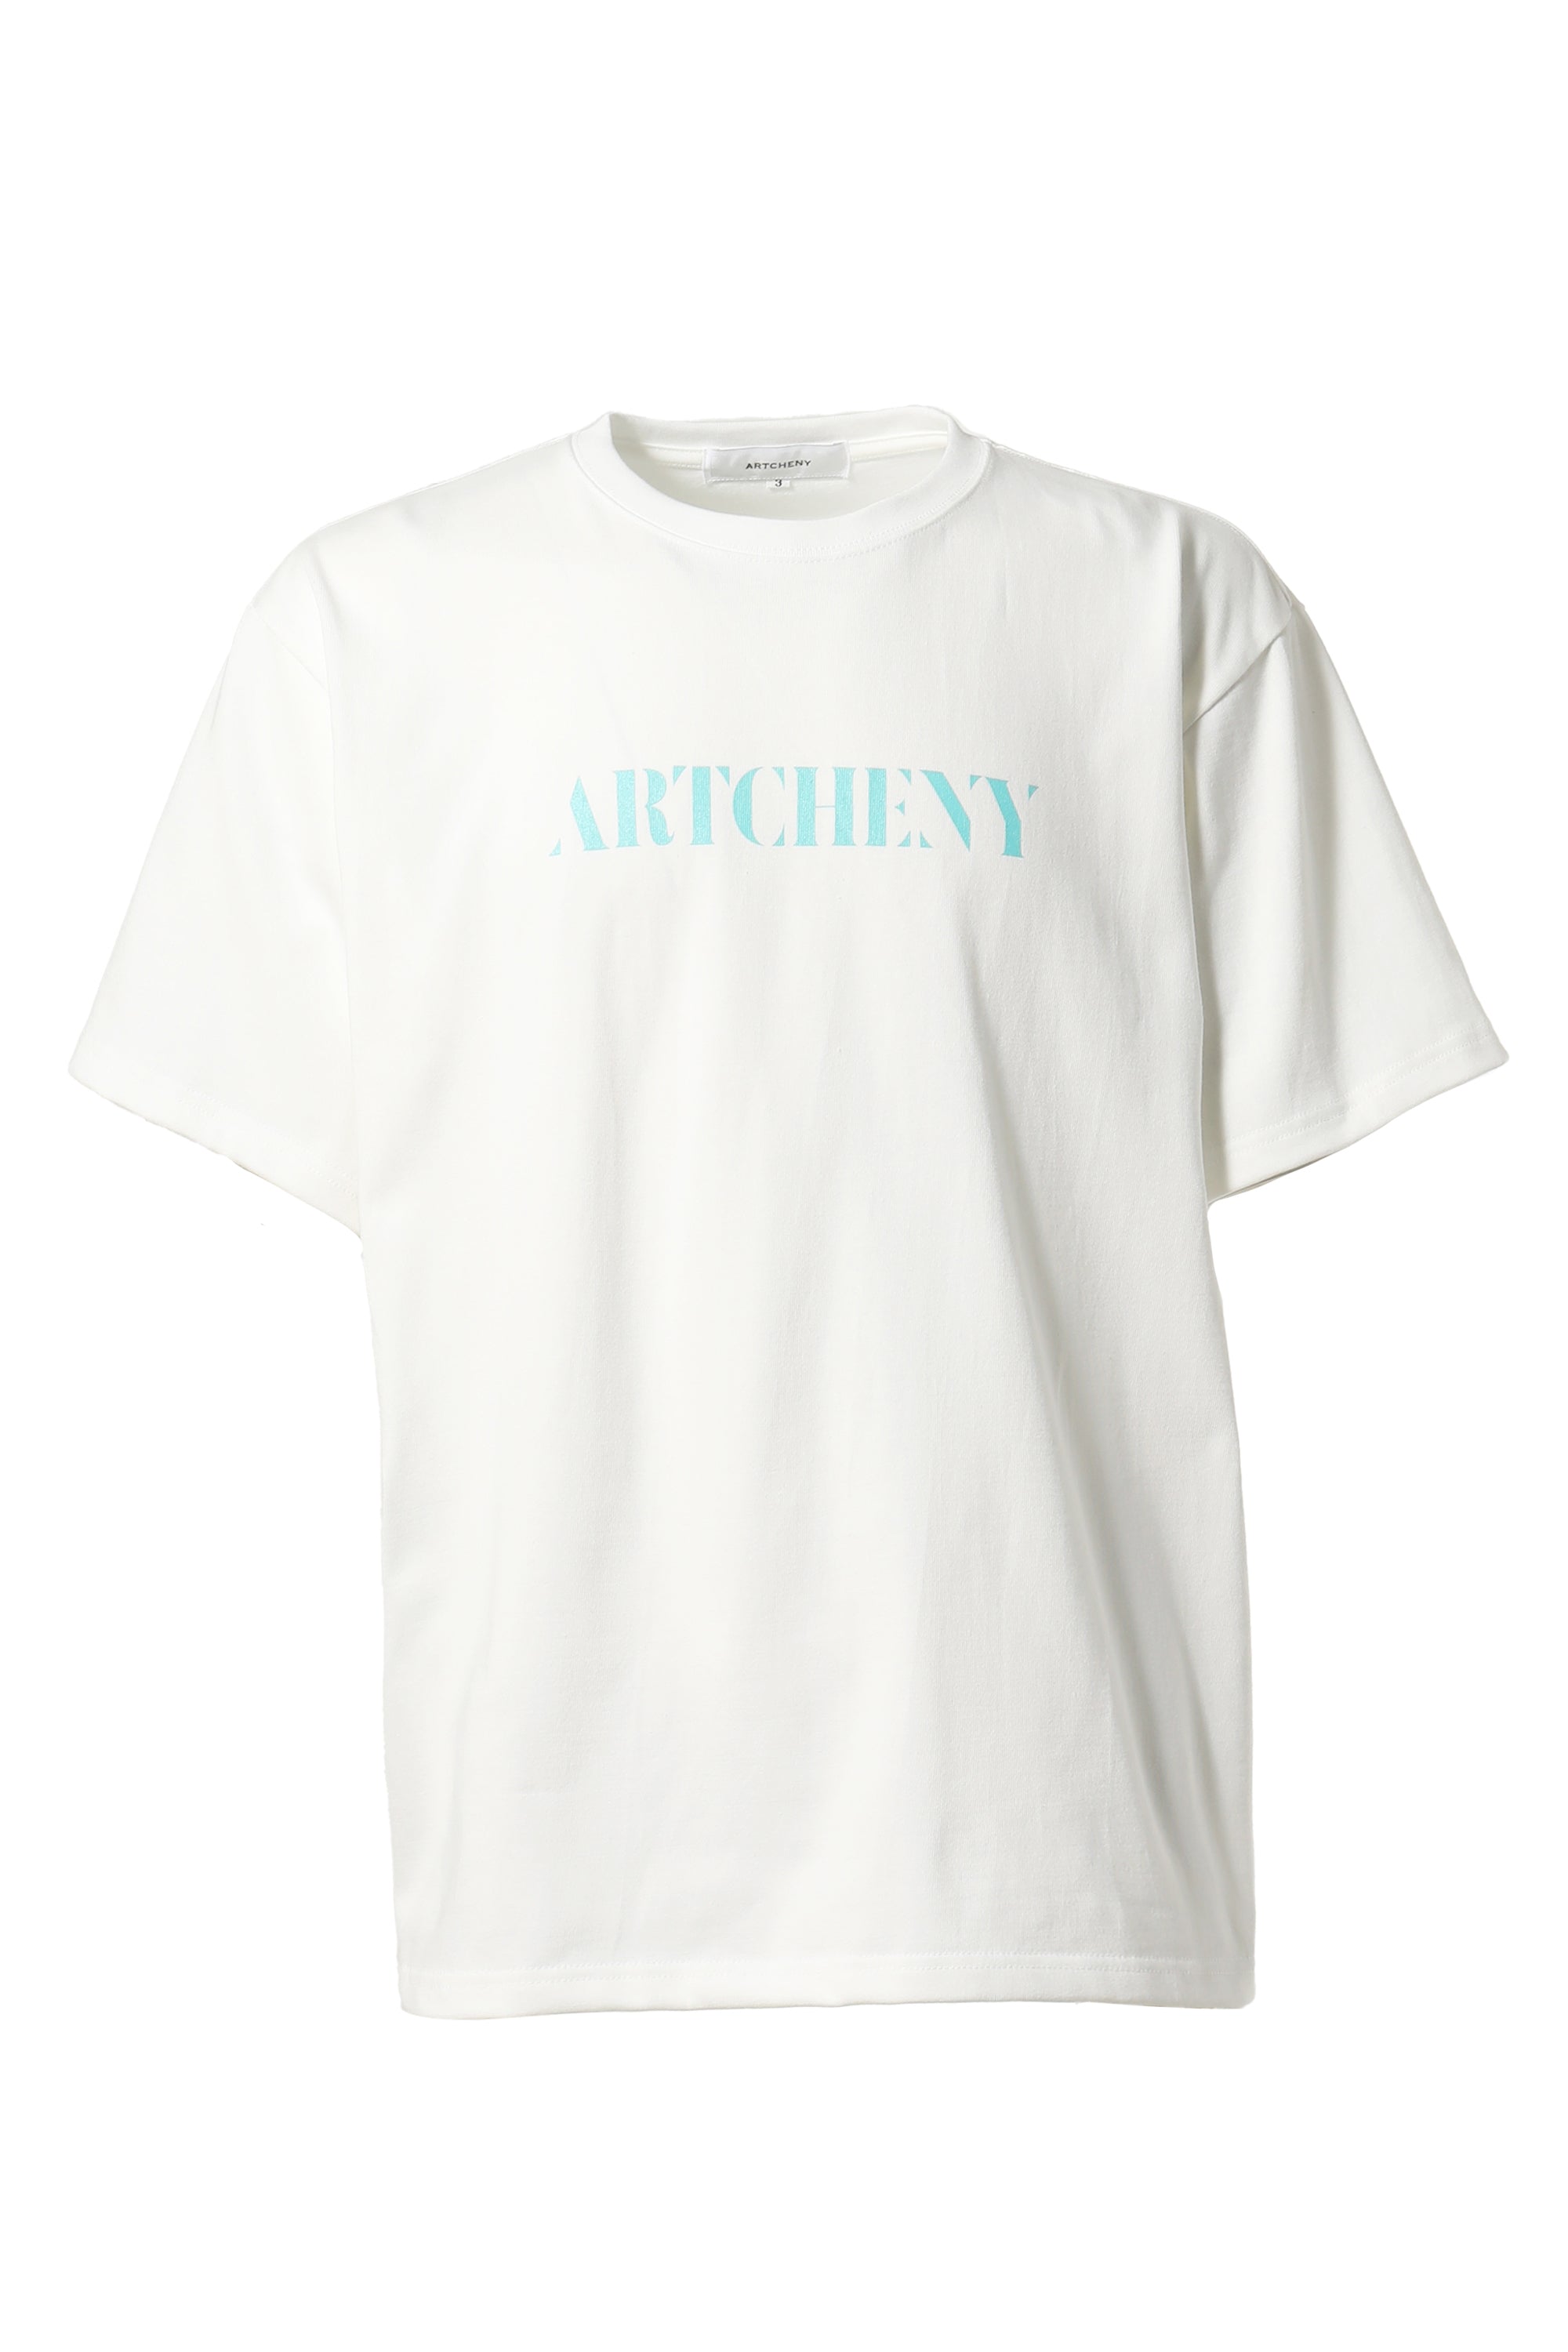 ARTCHENY SS23 TIFFARTCHENY T-SHIRTS / WHT -NUBIAN